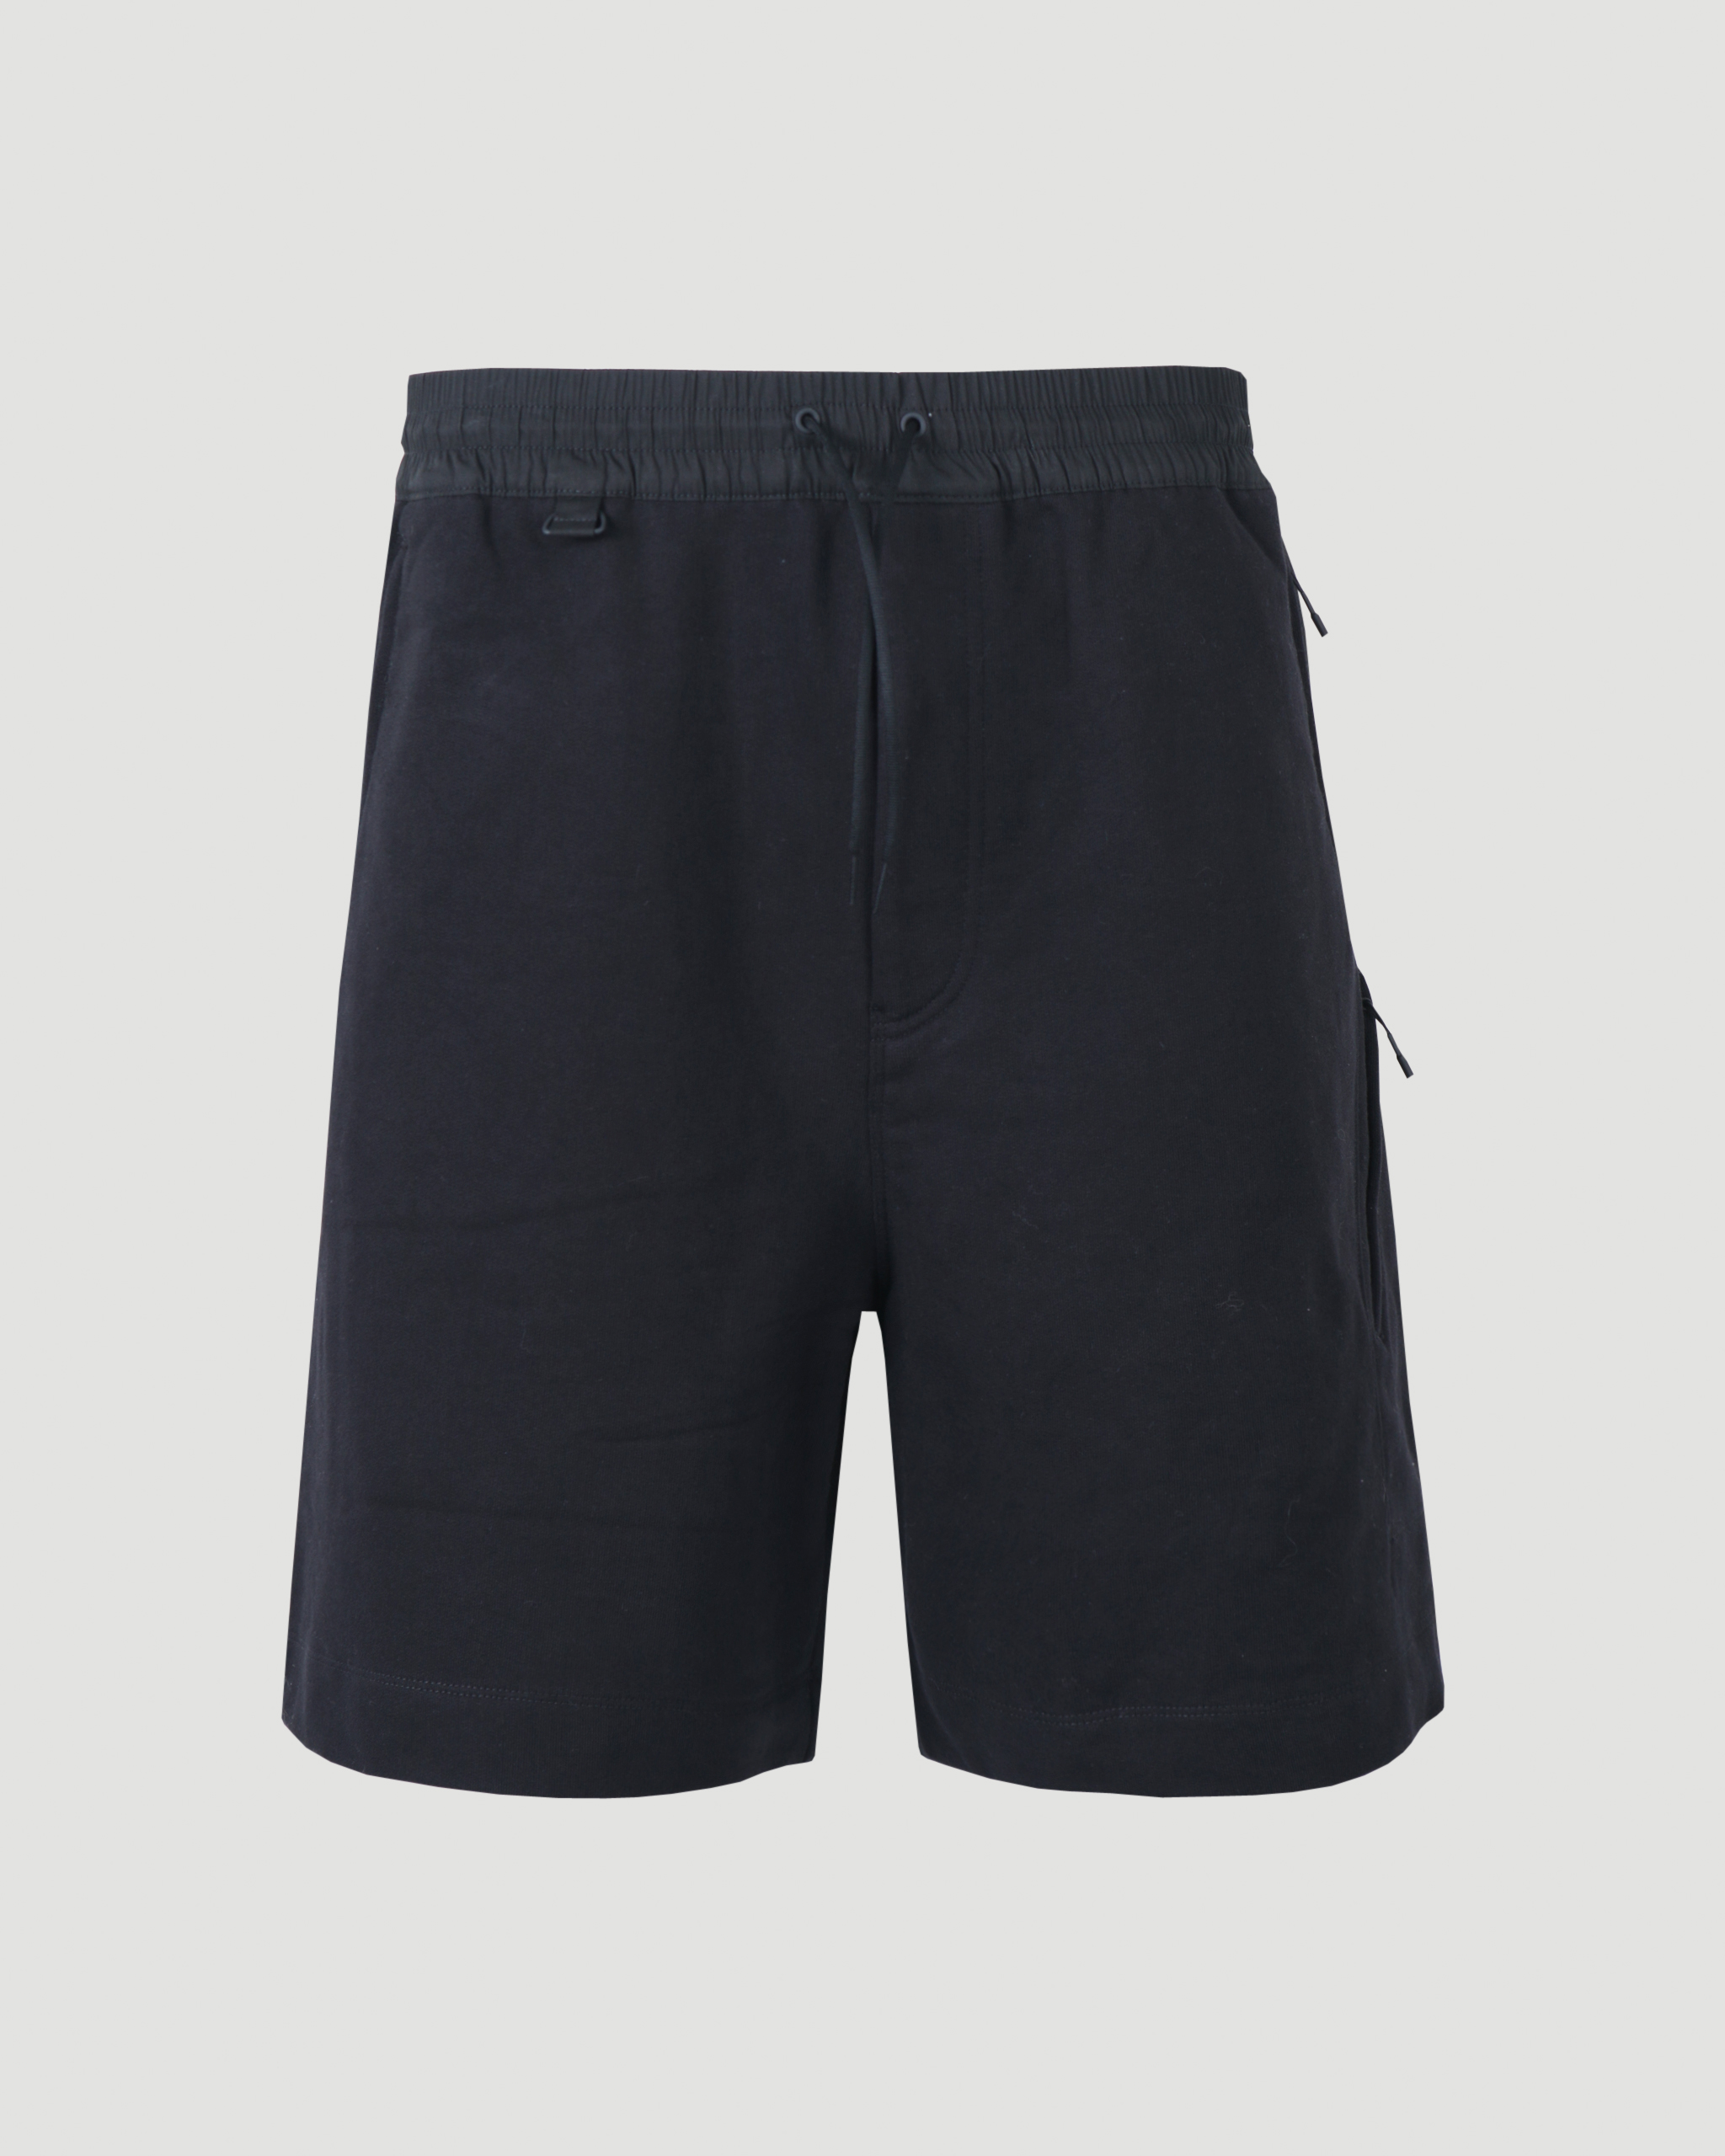 Classic utility shorts in black - All-U-Re